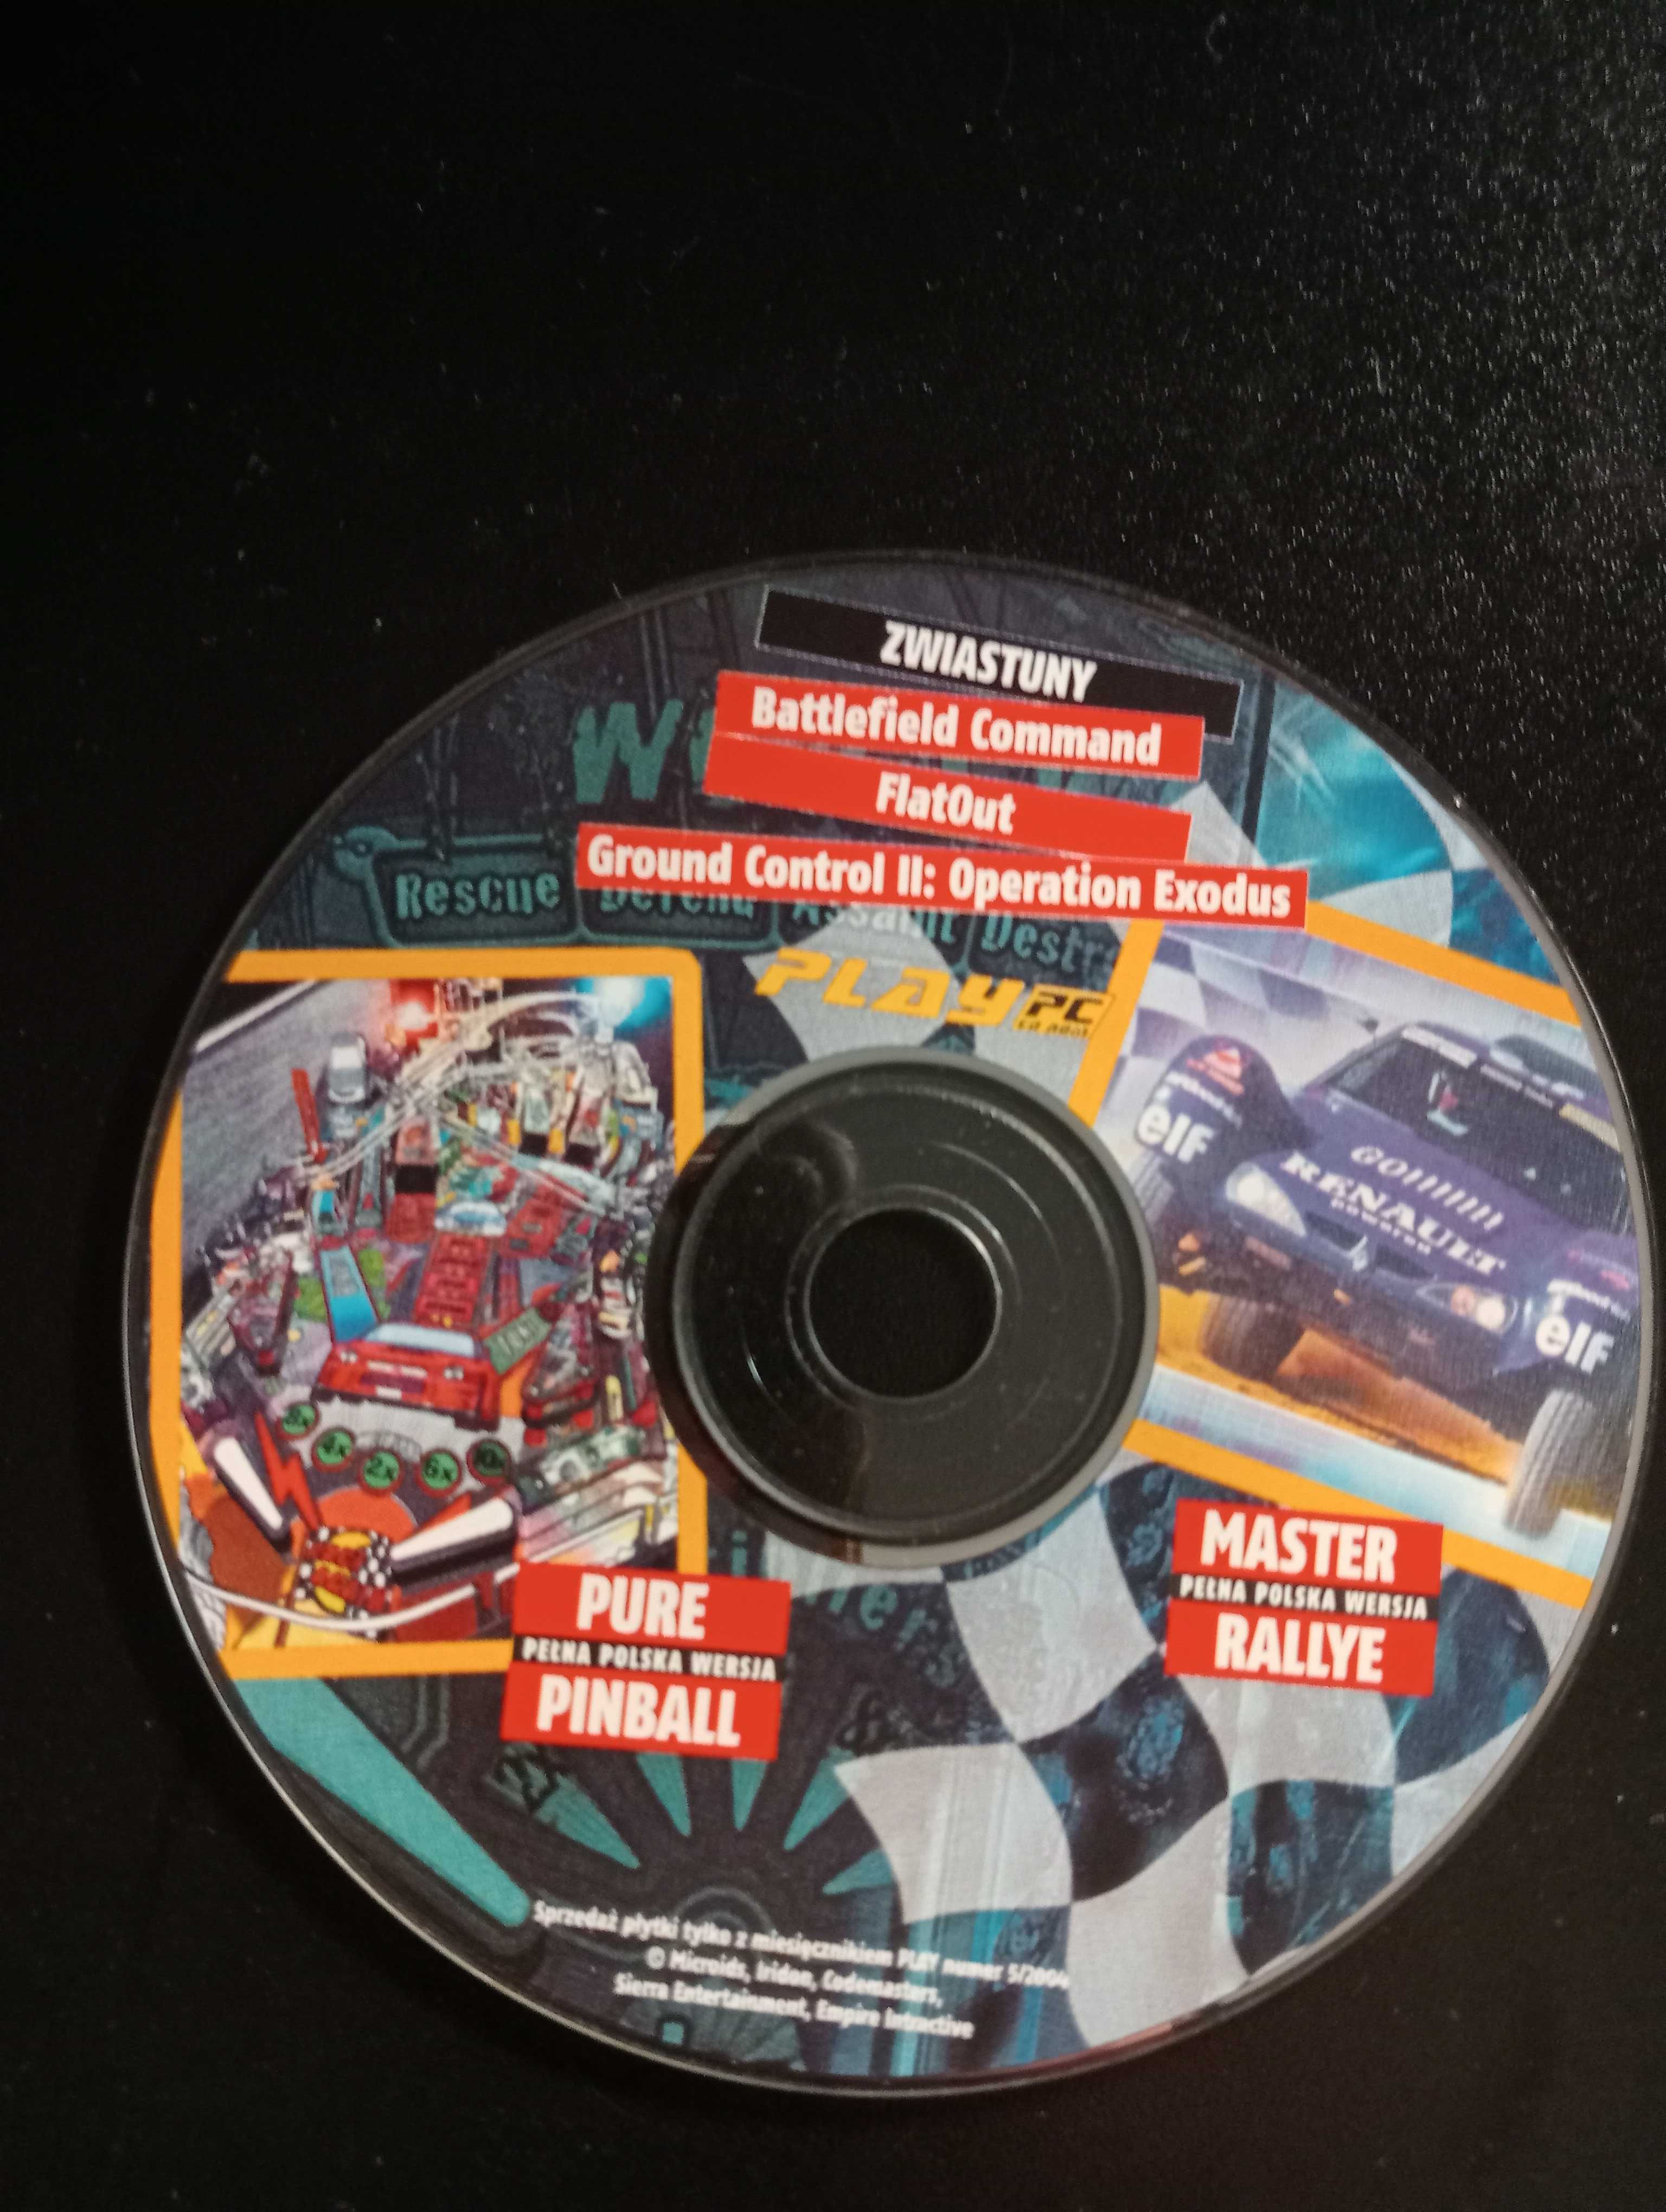 Master Rallye + Pure Pinball PC PL